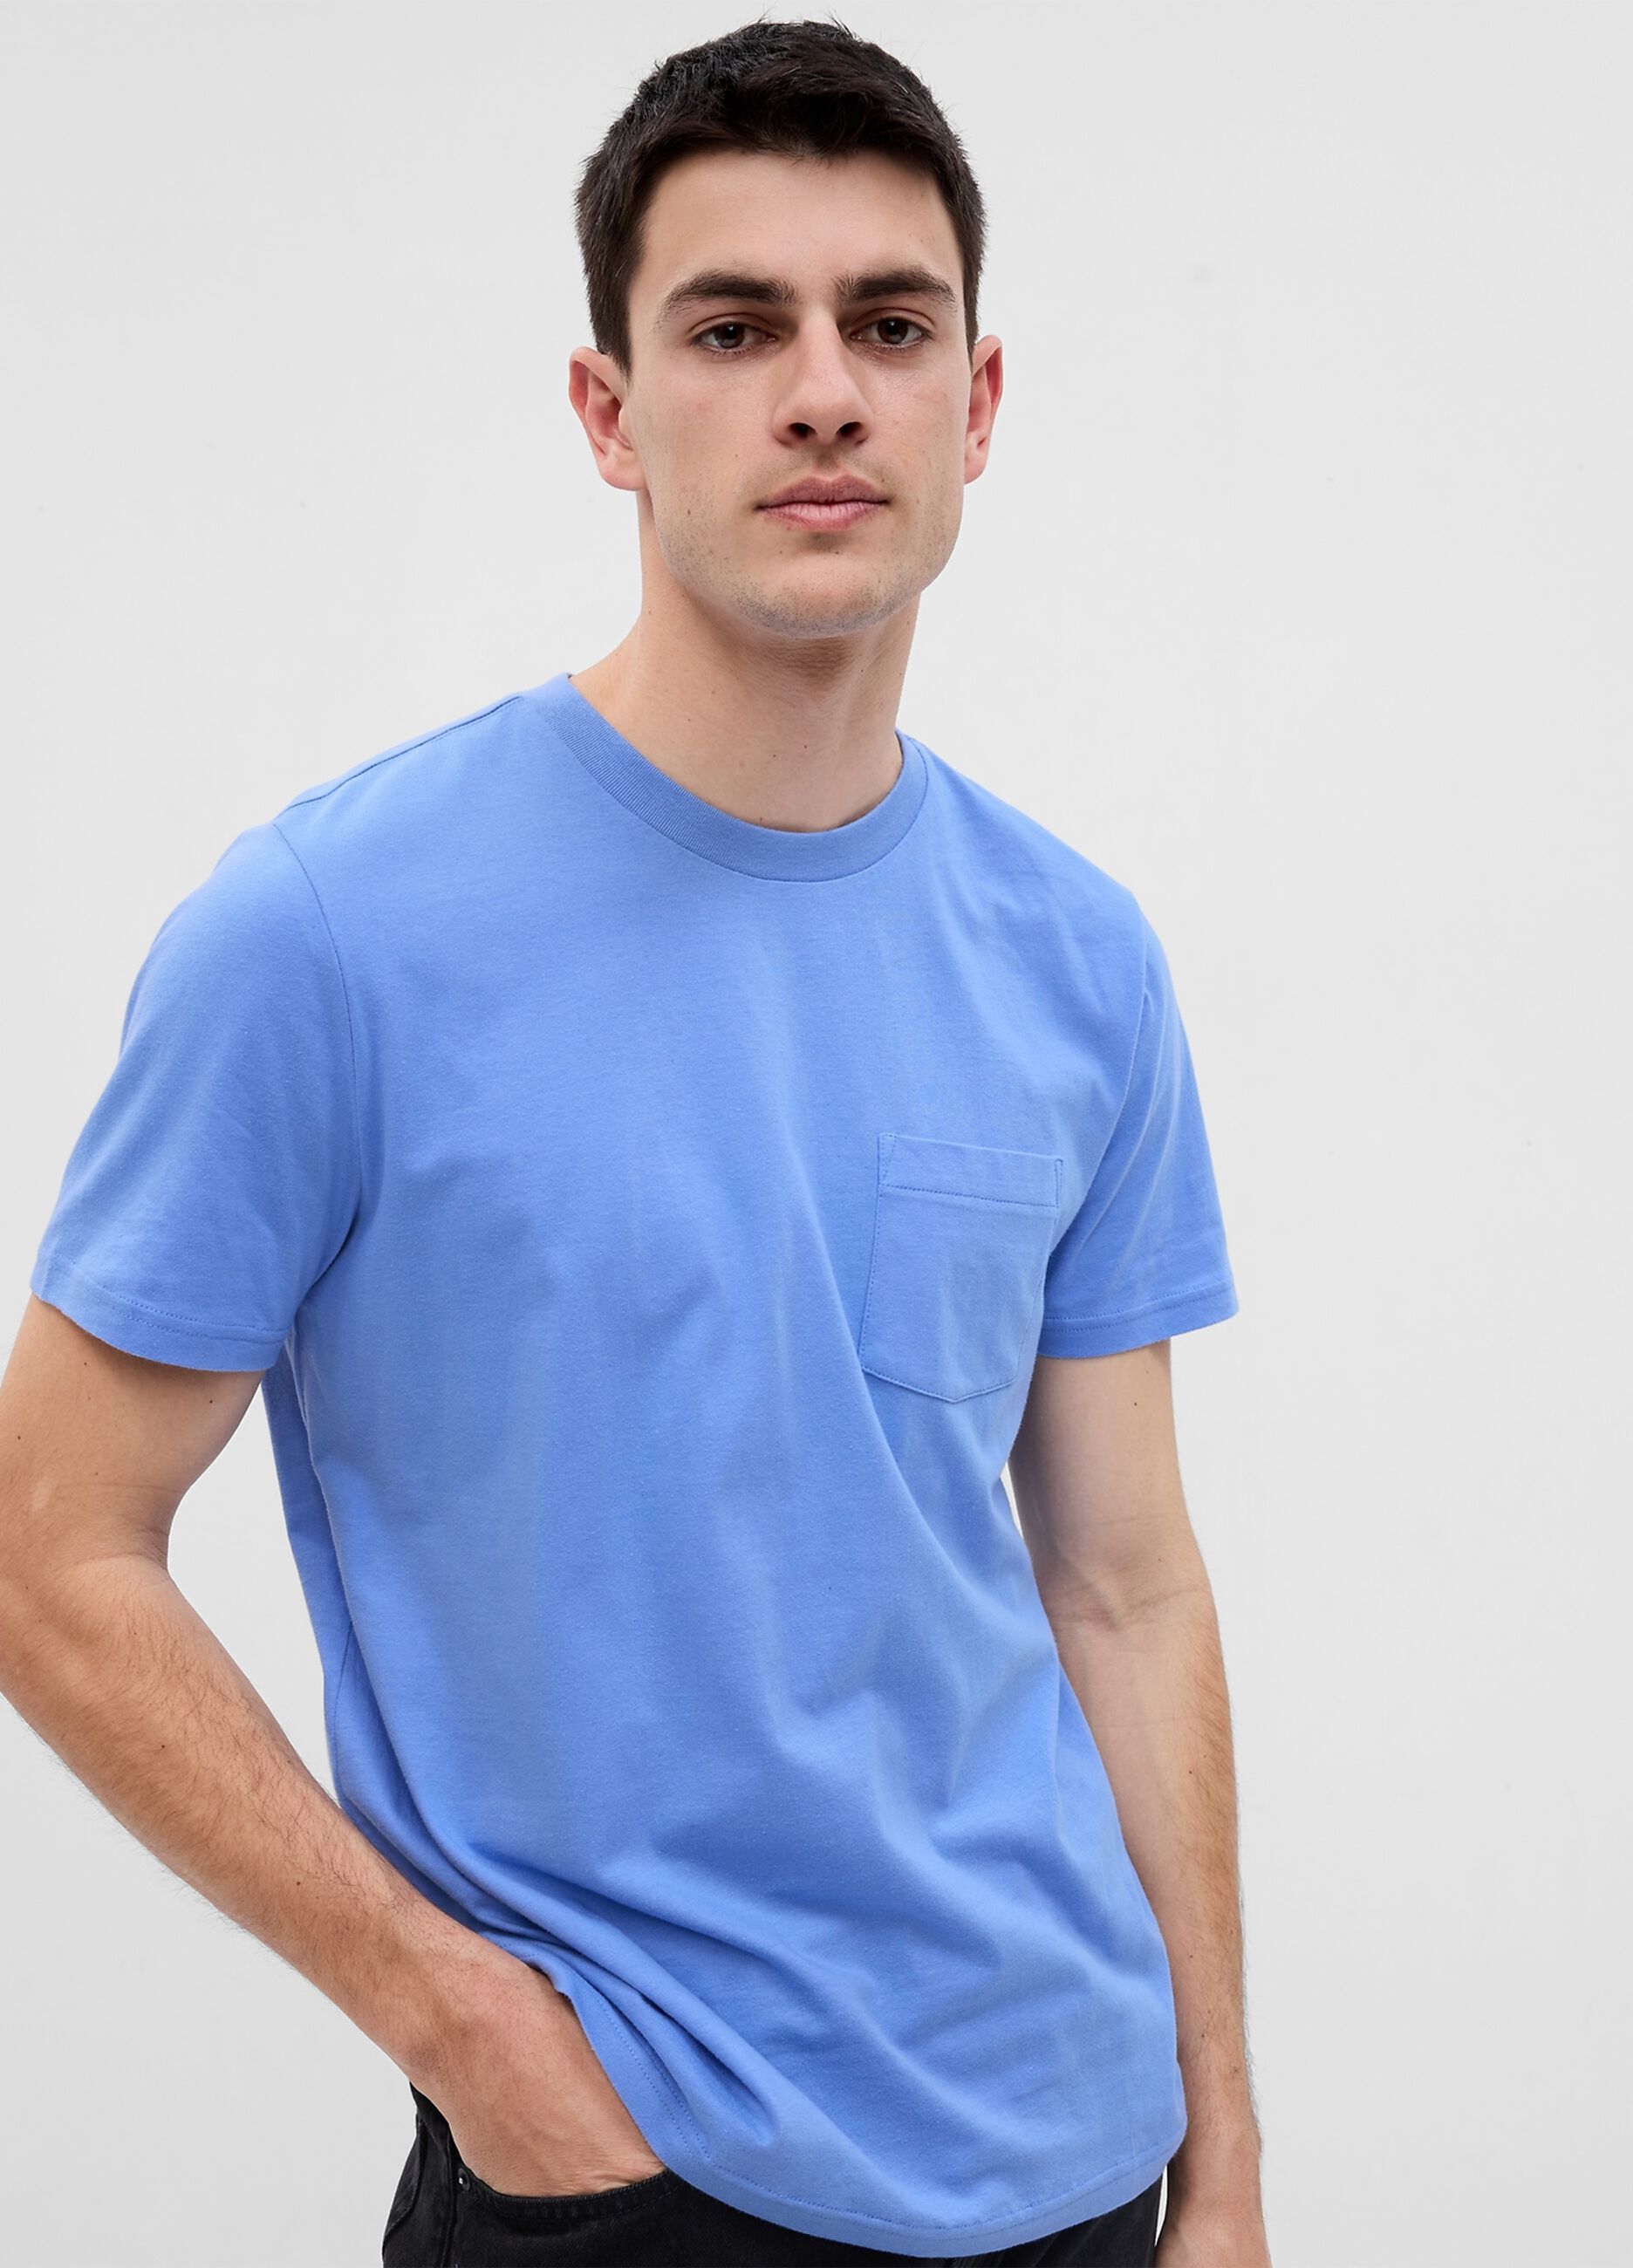 Organic cotton T-shirt with pocket